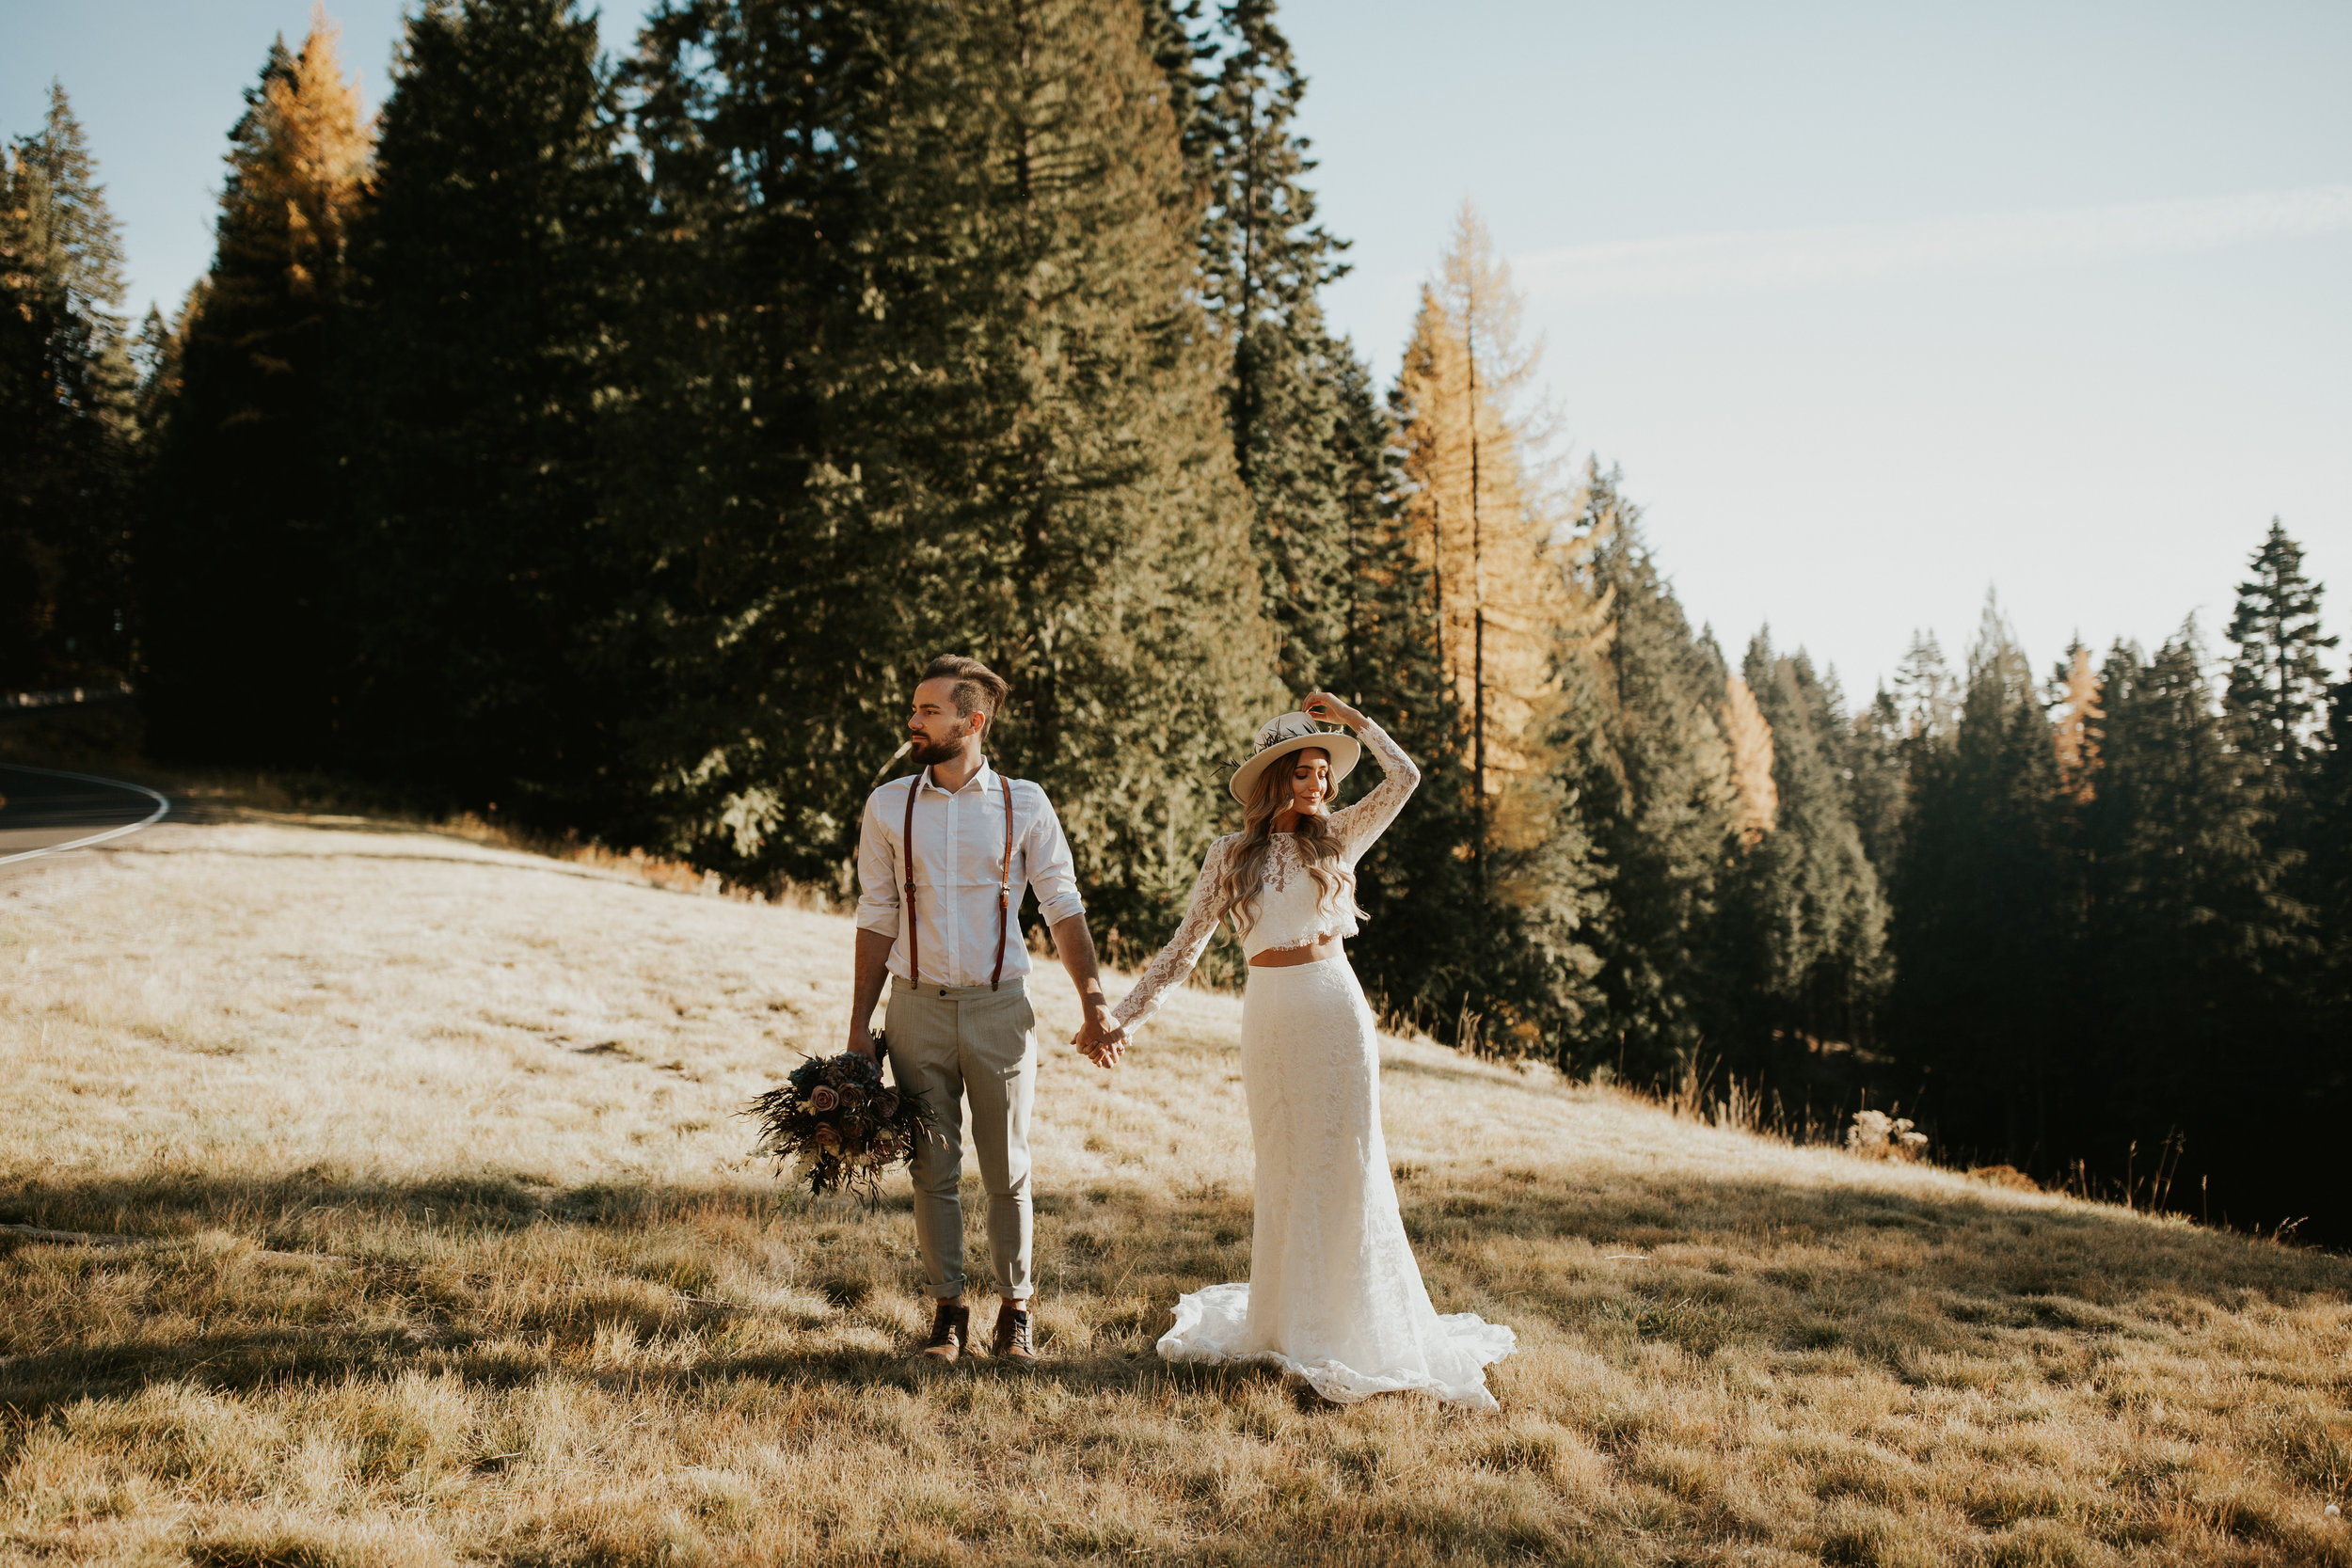 mt Spokane bridal photo shoot on a hill